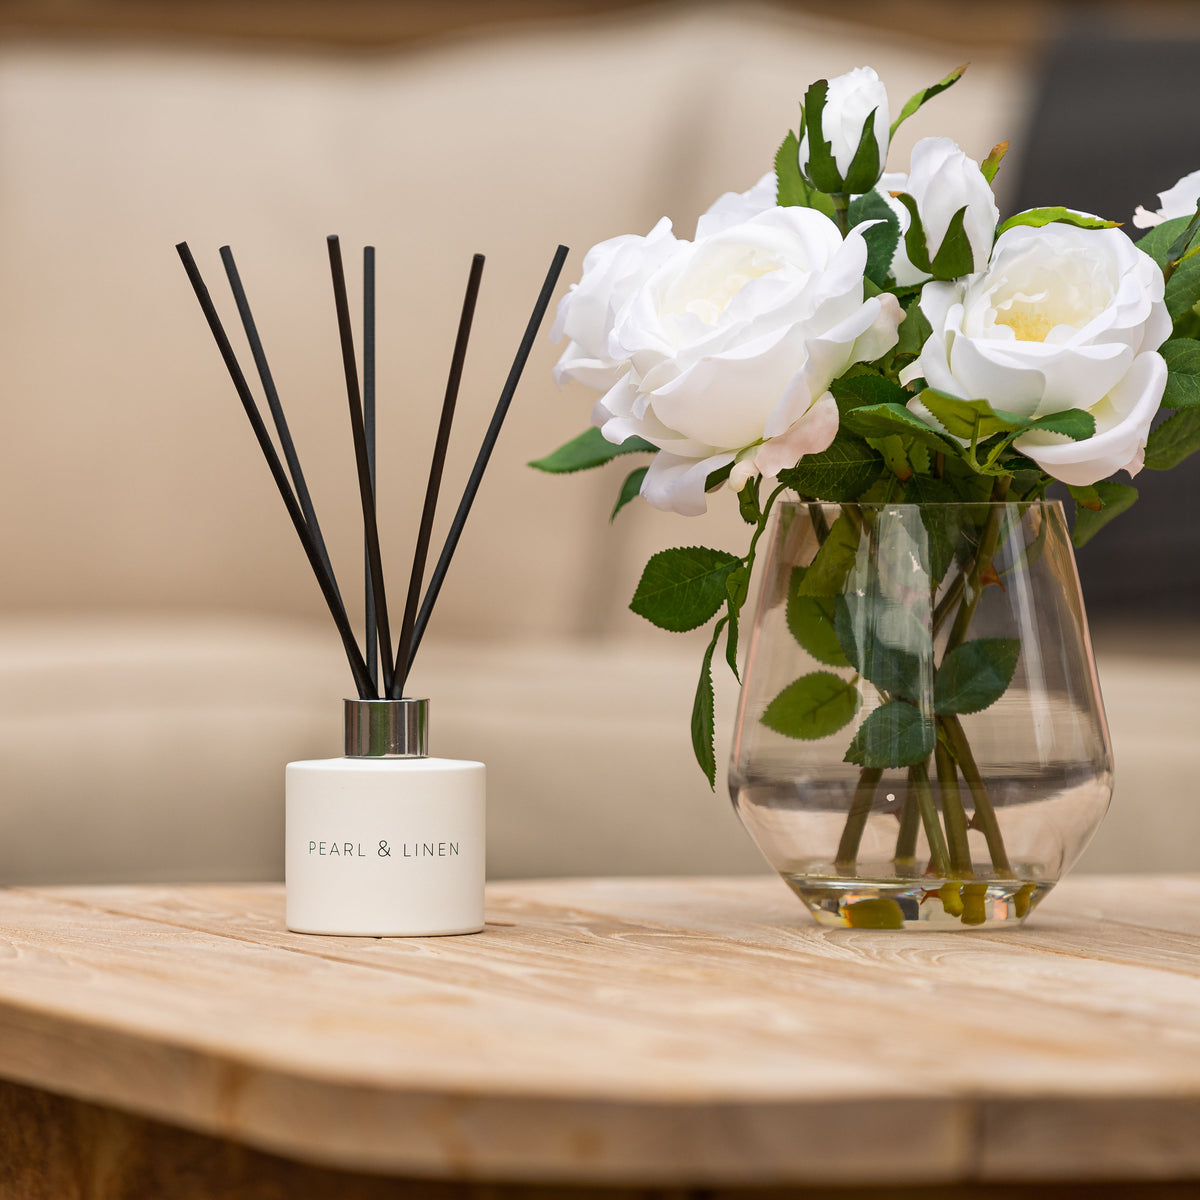 Faux White Rose Arrangement in Vase &amp; Our Signature Hand Poured luxury Aspen Rose Diffuser